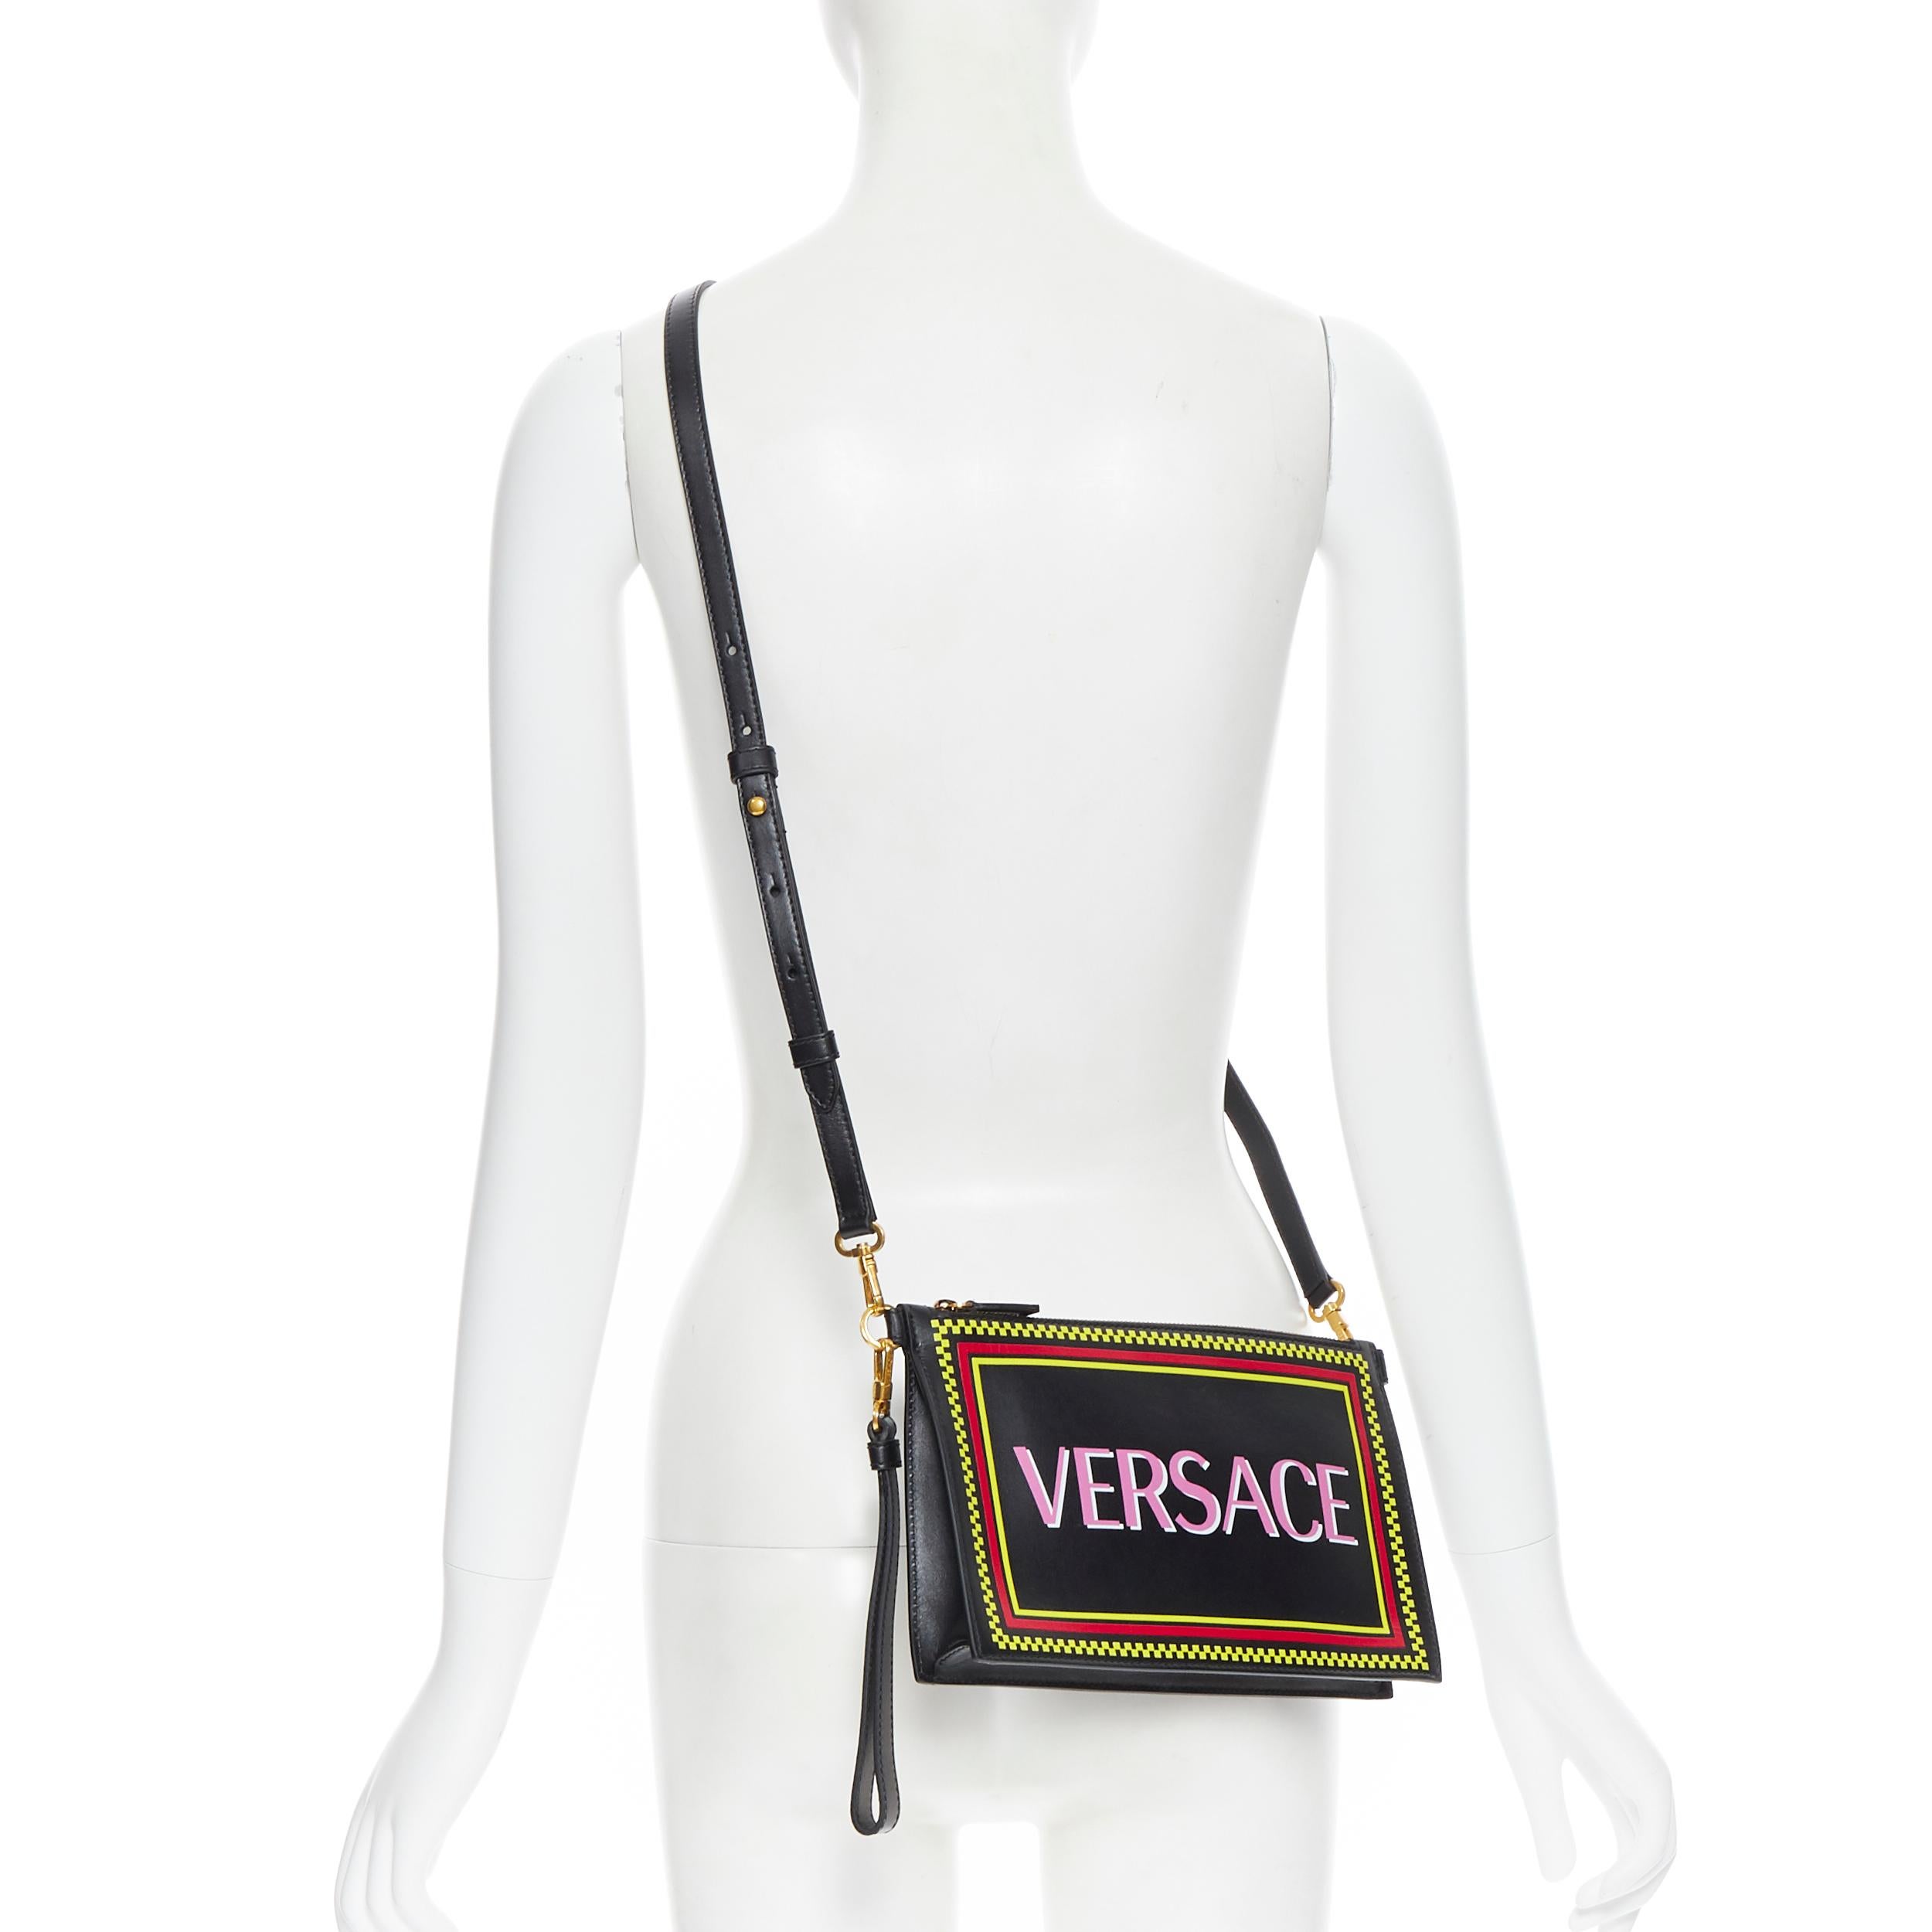 new VERSACE 90's logo print black leather zip wristlet clutch crossbody bag
Brand: Versace
Designer: Donatella Versace
Collection: 2020
Model Name / Style: Crossbody clutch
Material: Leather
Color: Black
Pattern: Solid
Extra Detail: 90's logo print